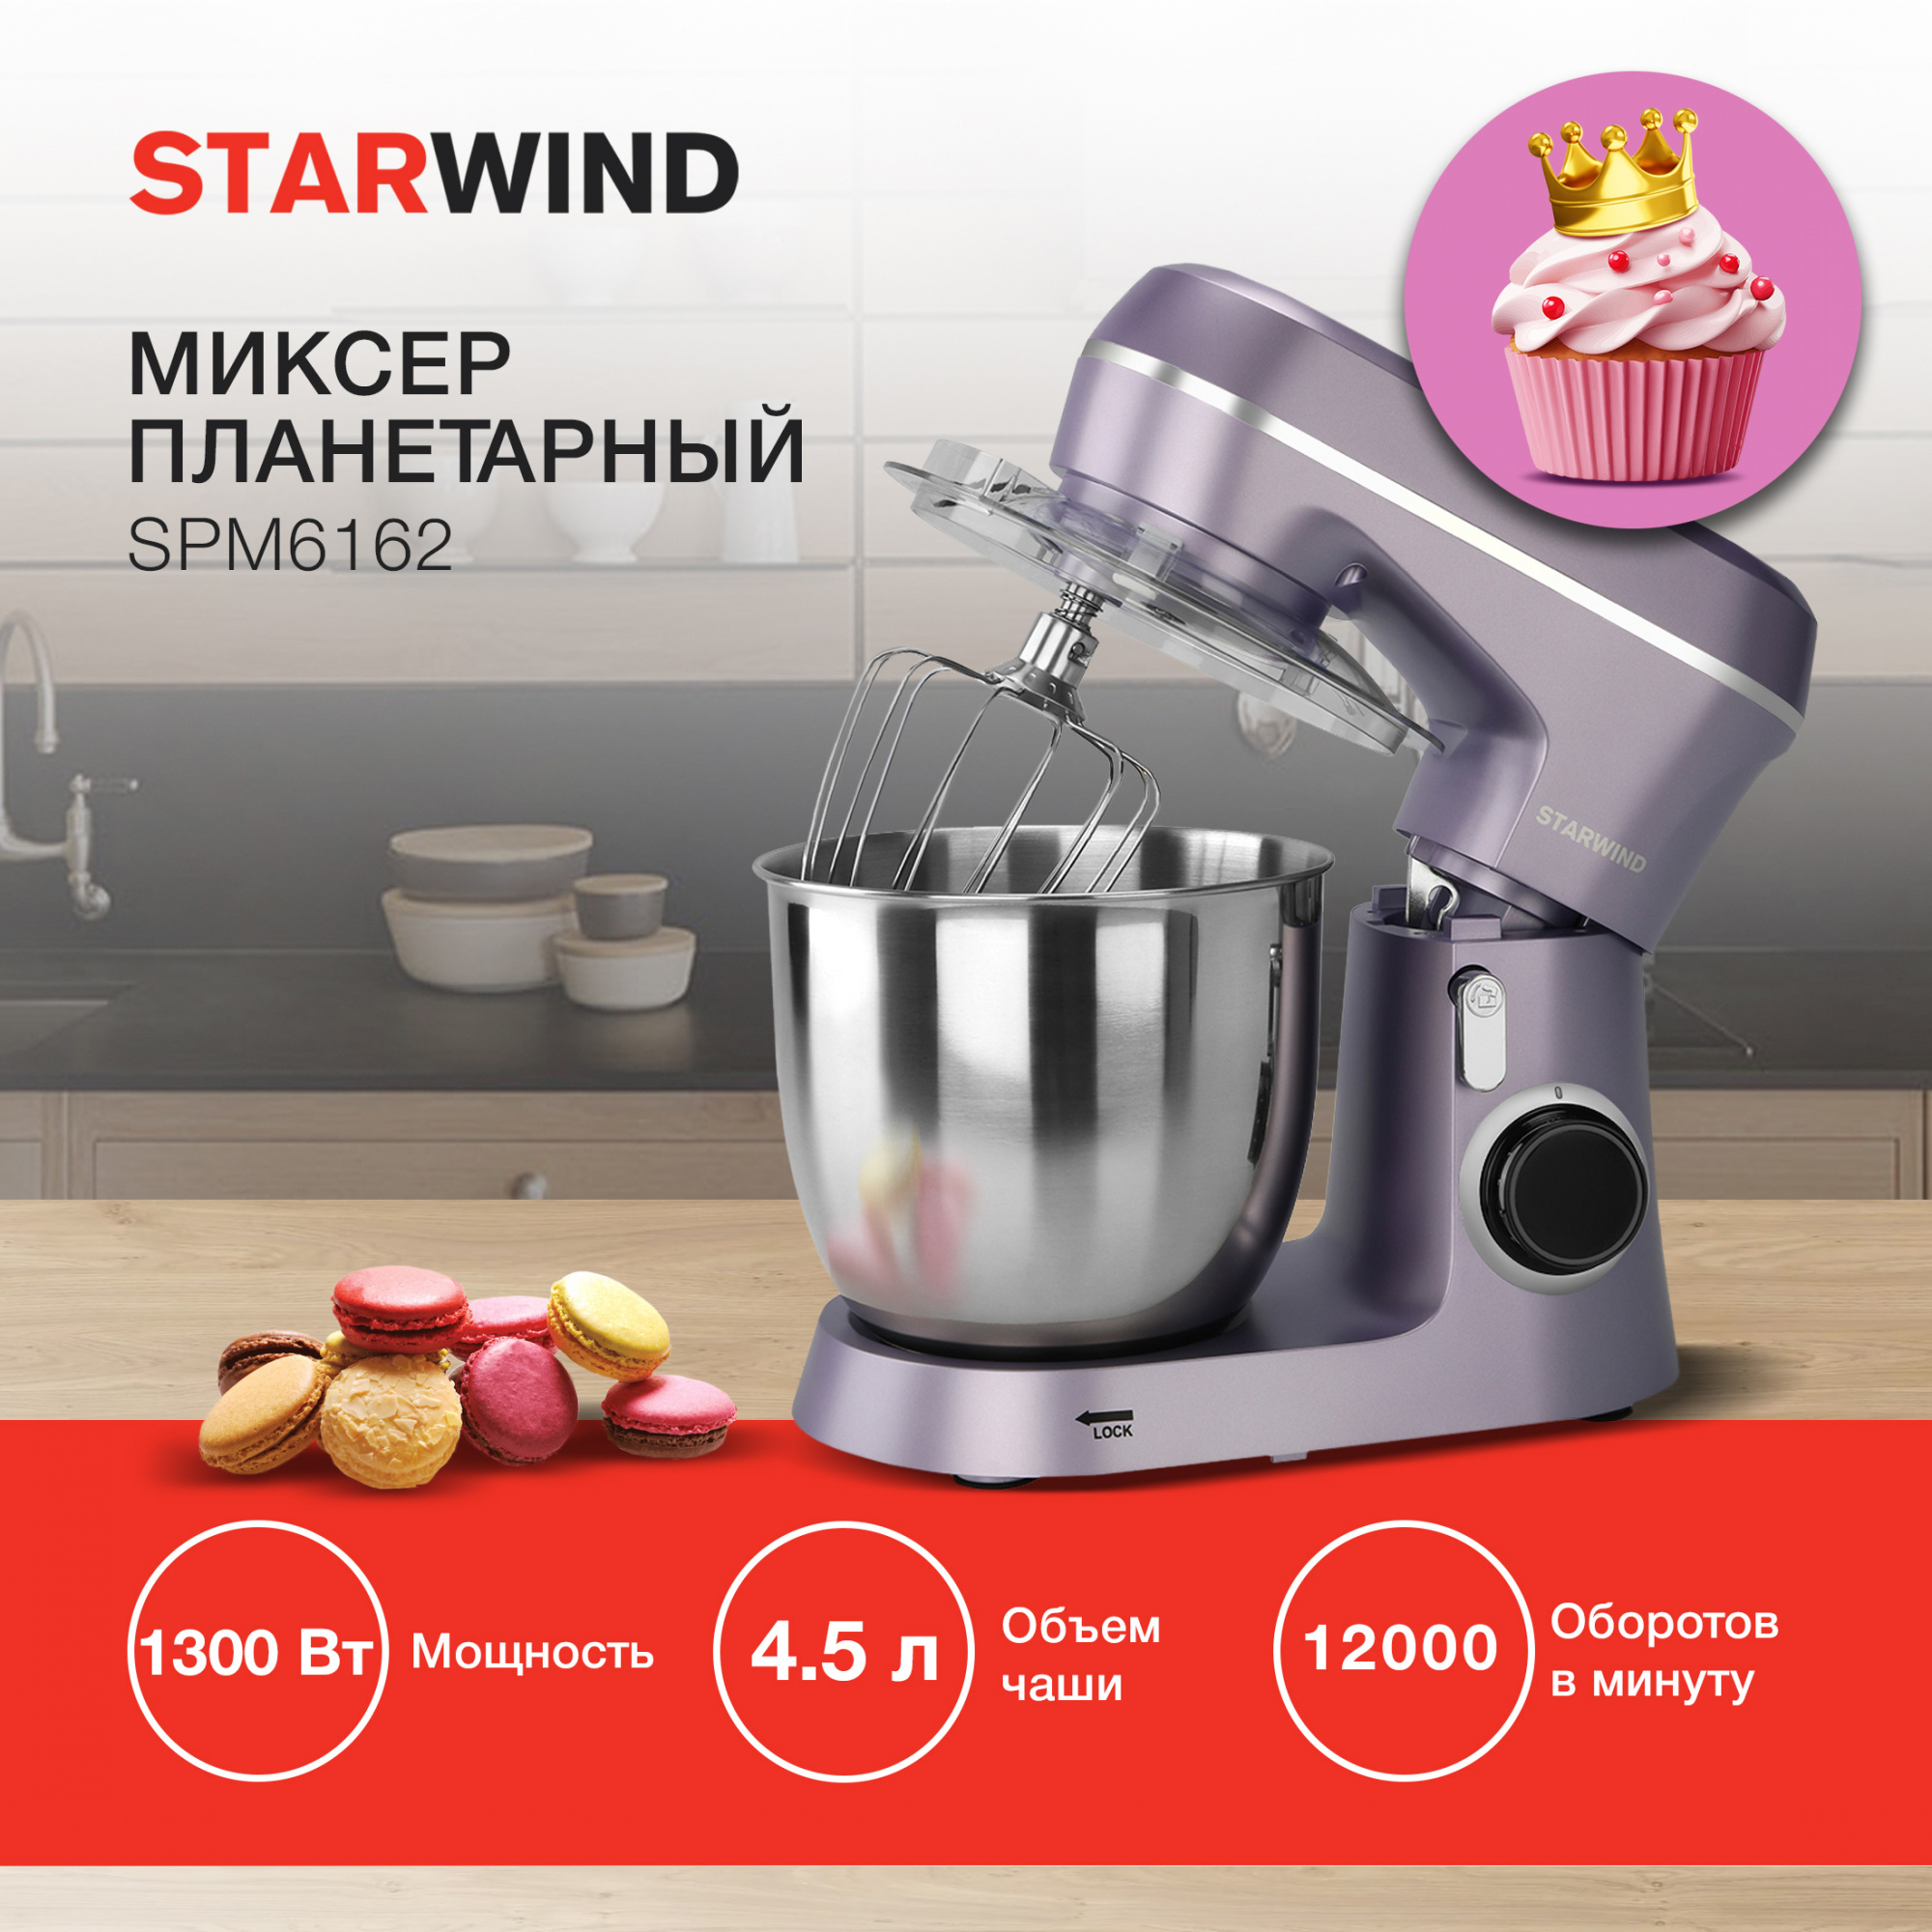 Миксер планетарный Starwind SPM6162 лавандовый от магазина Старвинд